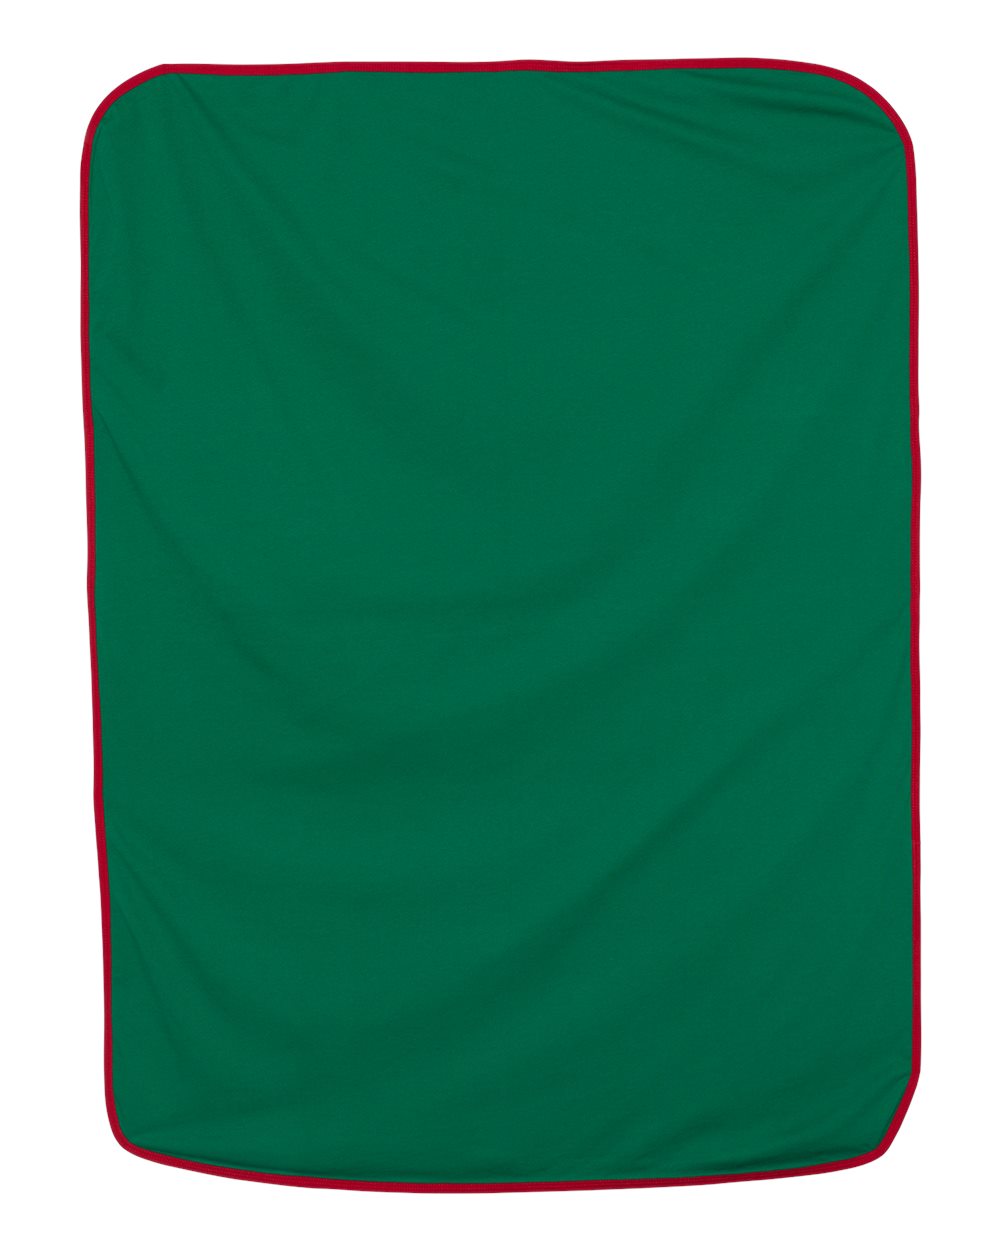 rabbit skins premium jersey infant blanket kelly green red